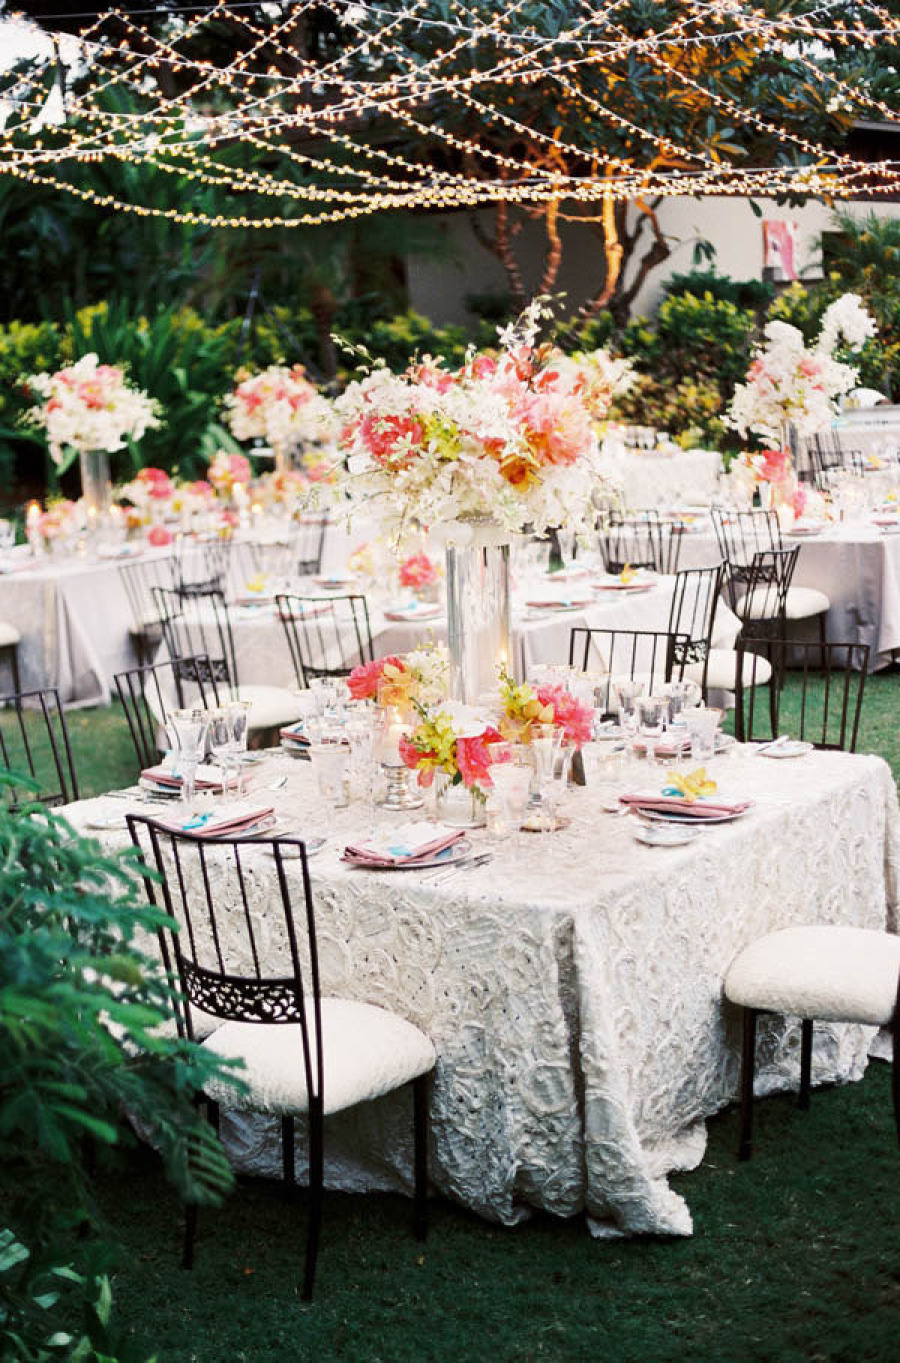 Stylish Outdoor Wedding Reception Ideas